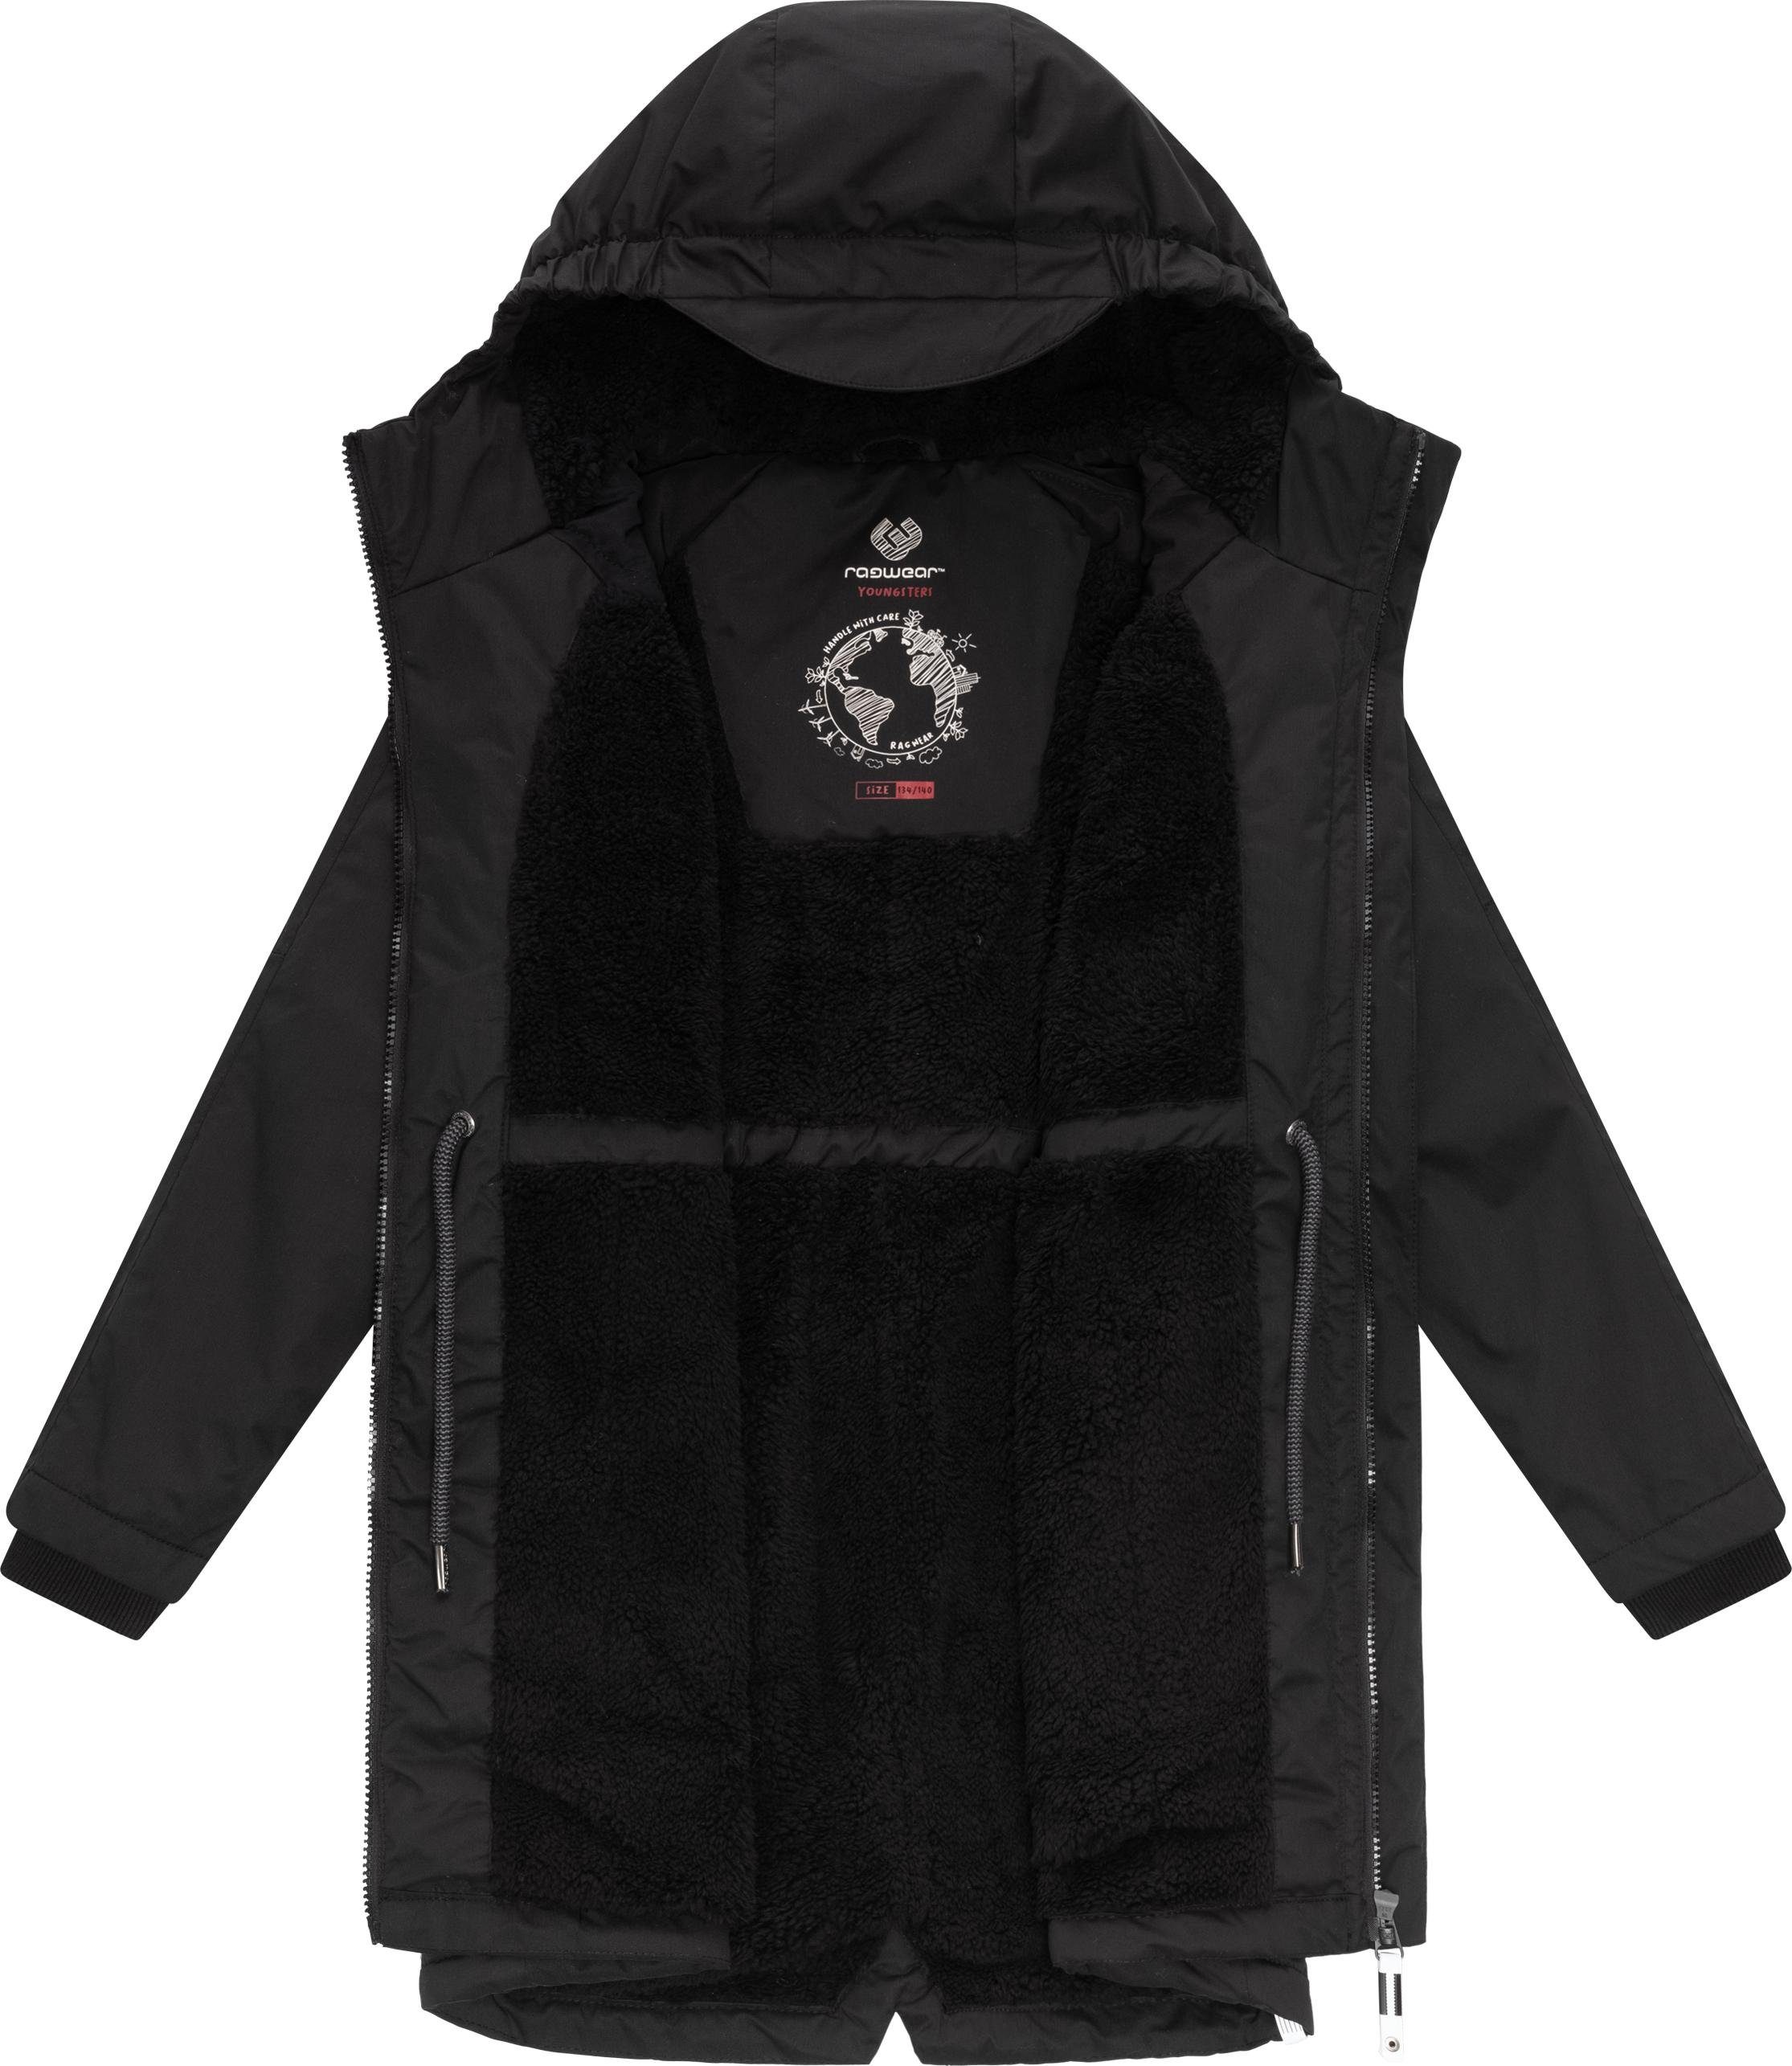 Ragwear Winterjacke Uniparka Jacke mit flauschig schwarz Teddyfell-Innenfutter warmem B